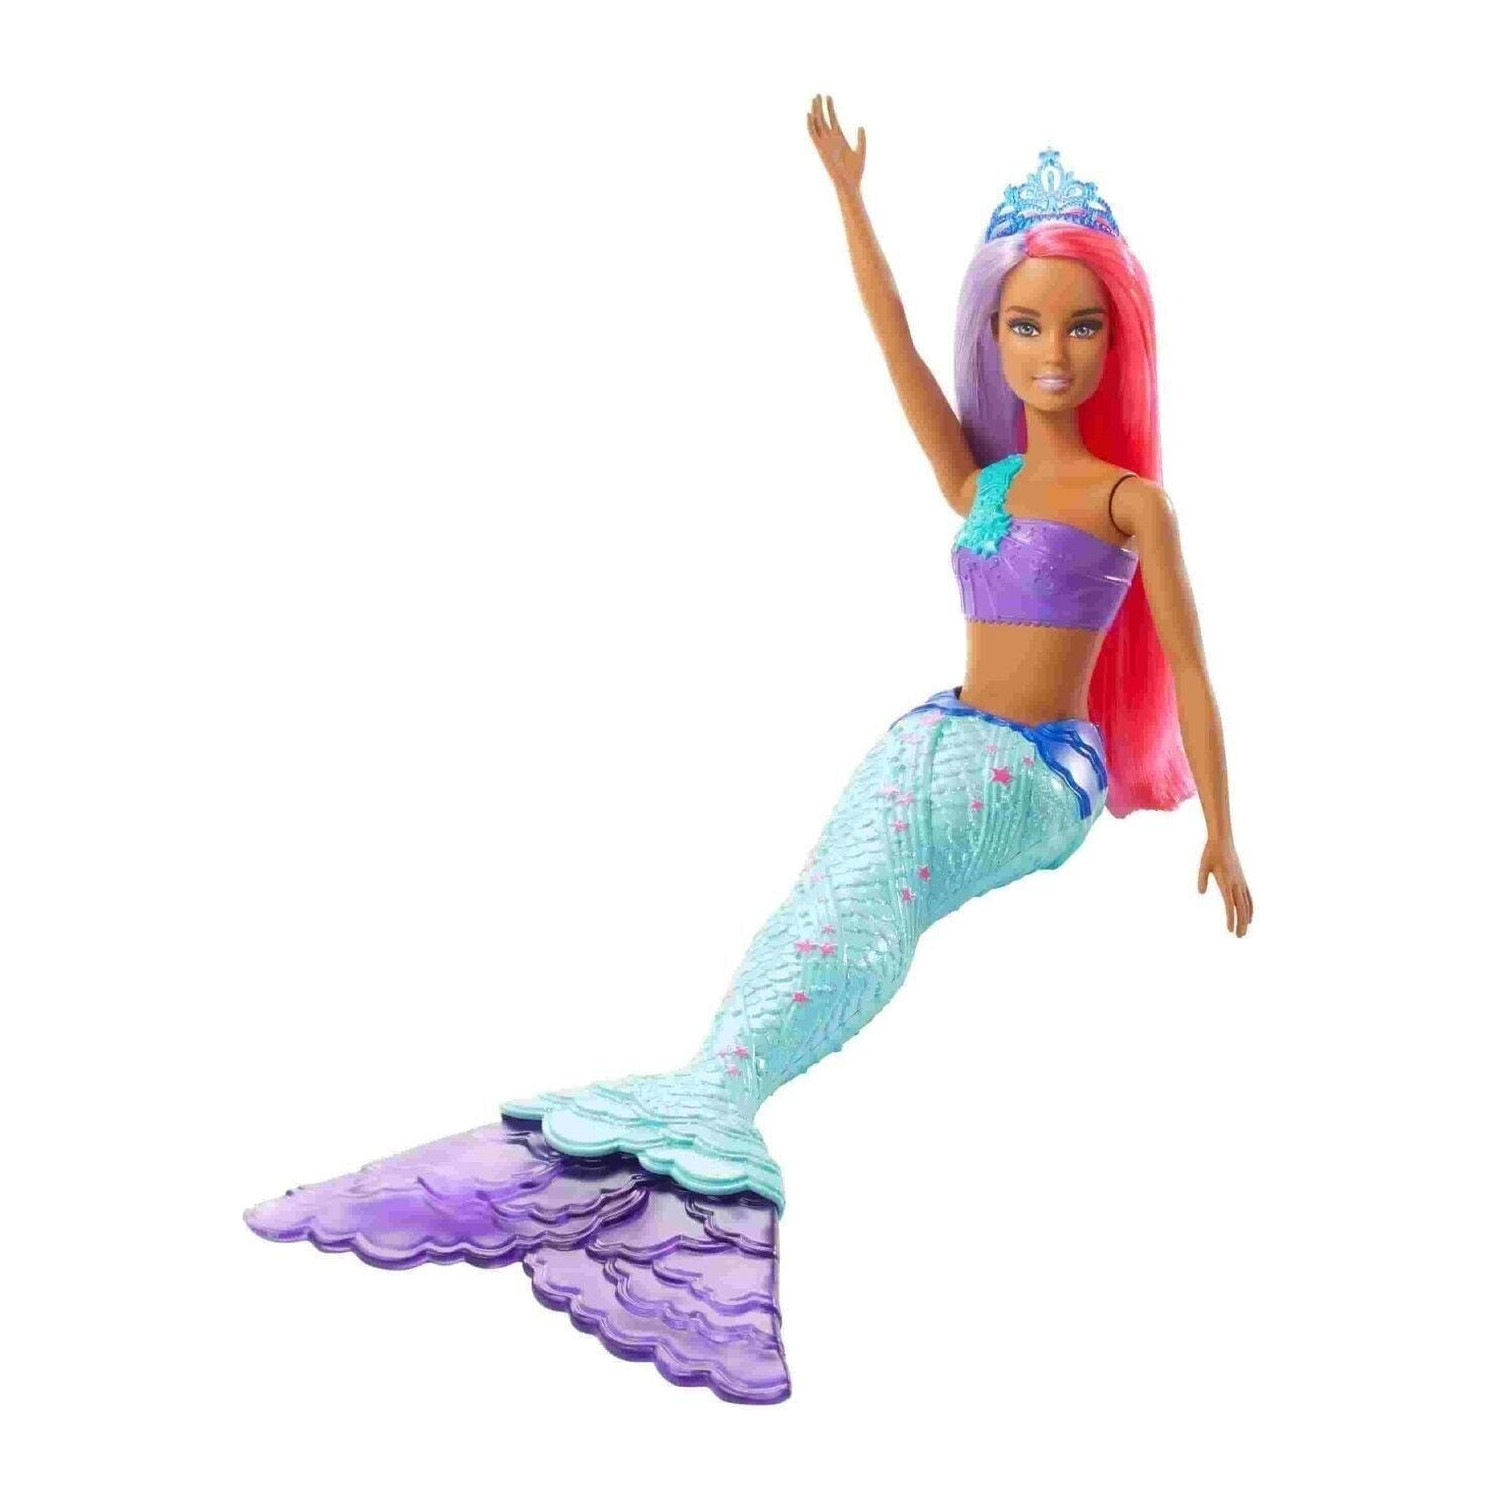 Куклы Barbie Dreamtopia Mermaid GJK07 куклы русалки barbie dreamtopia fxt08